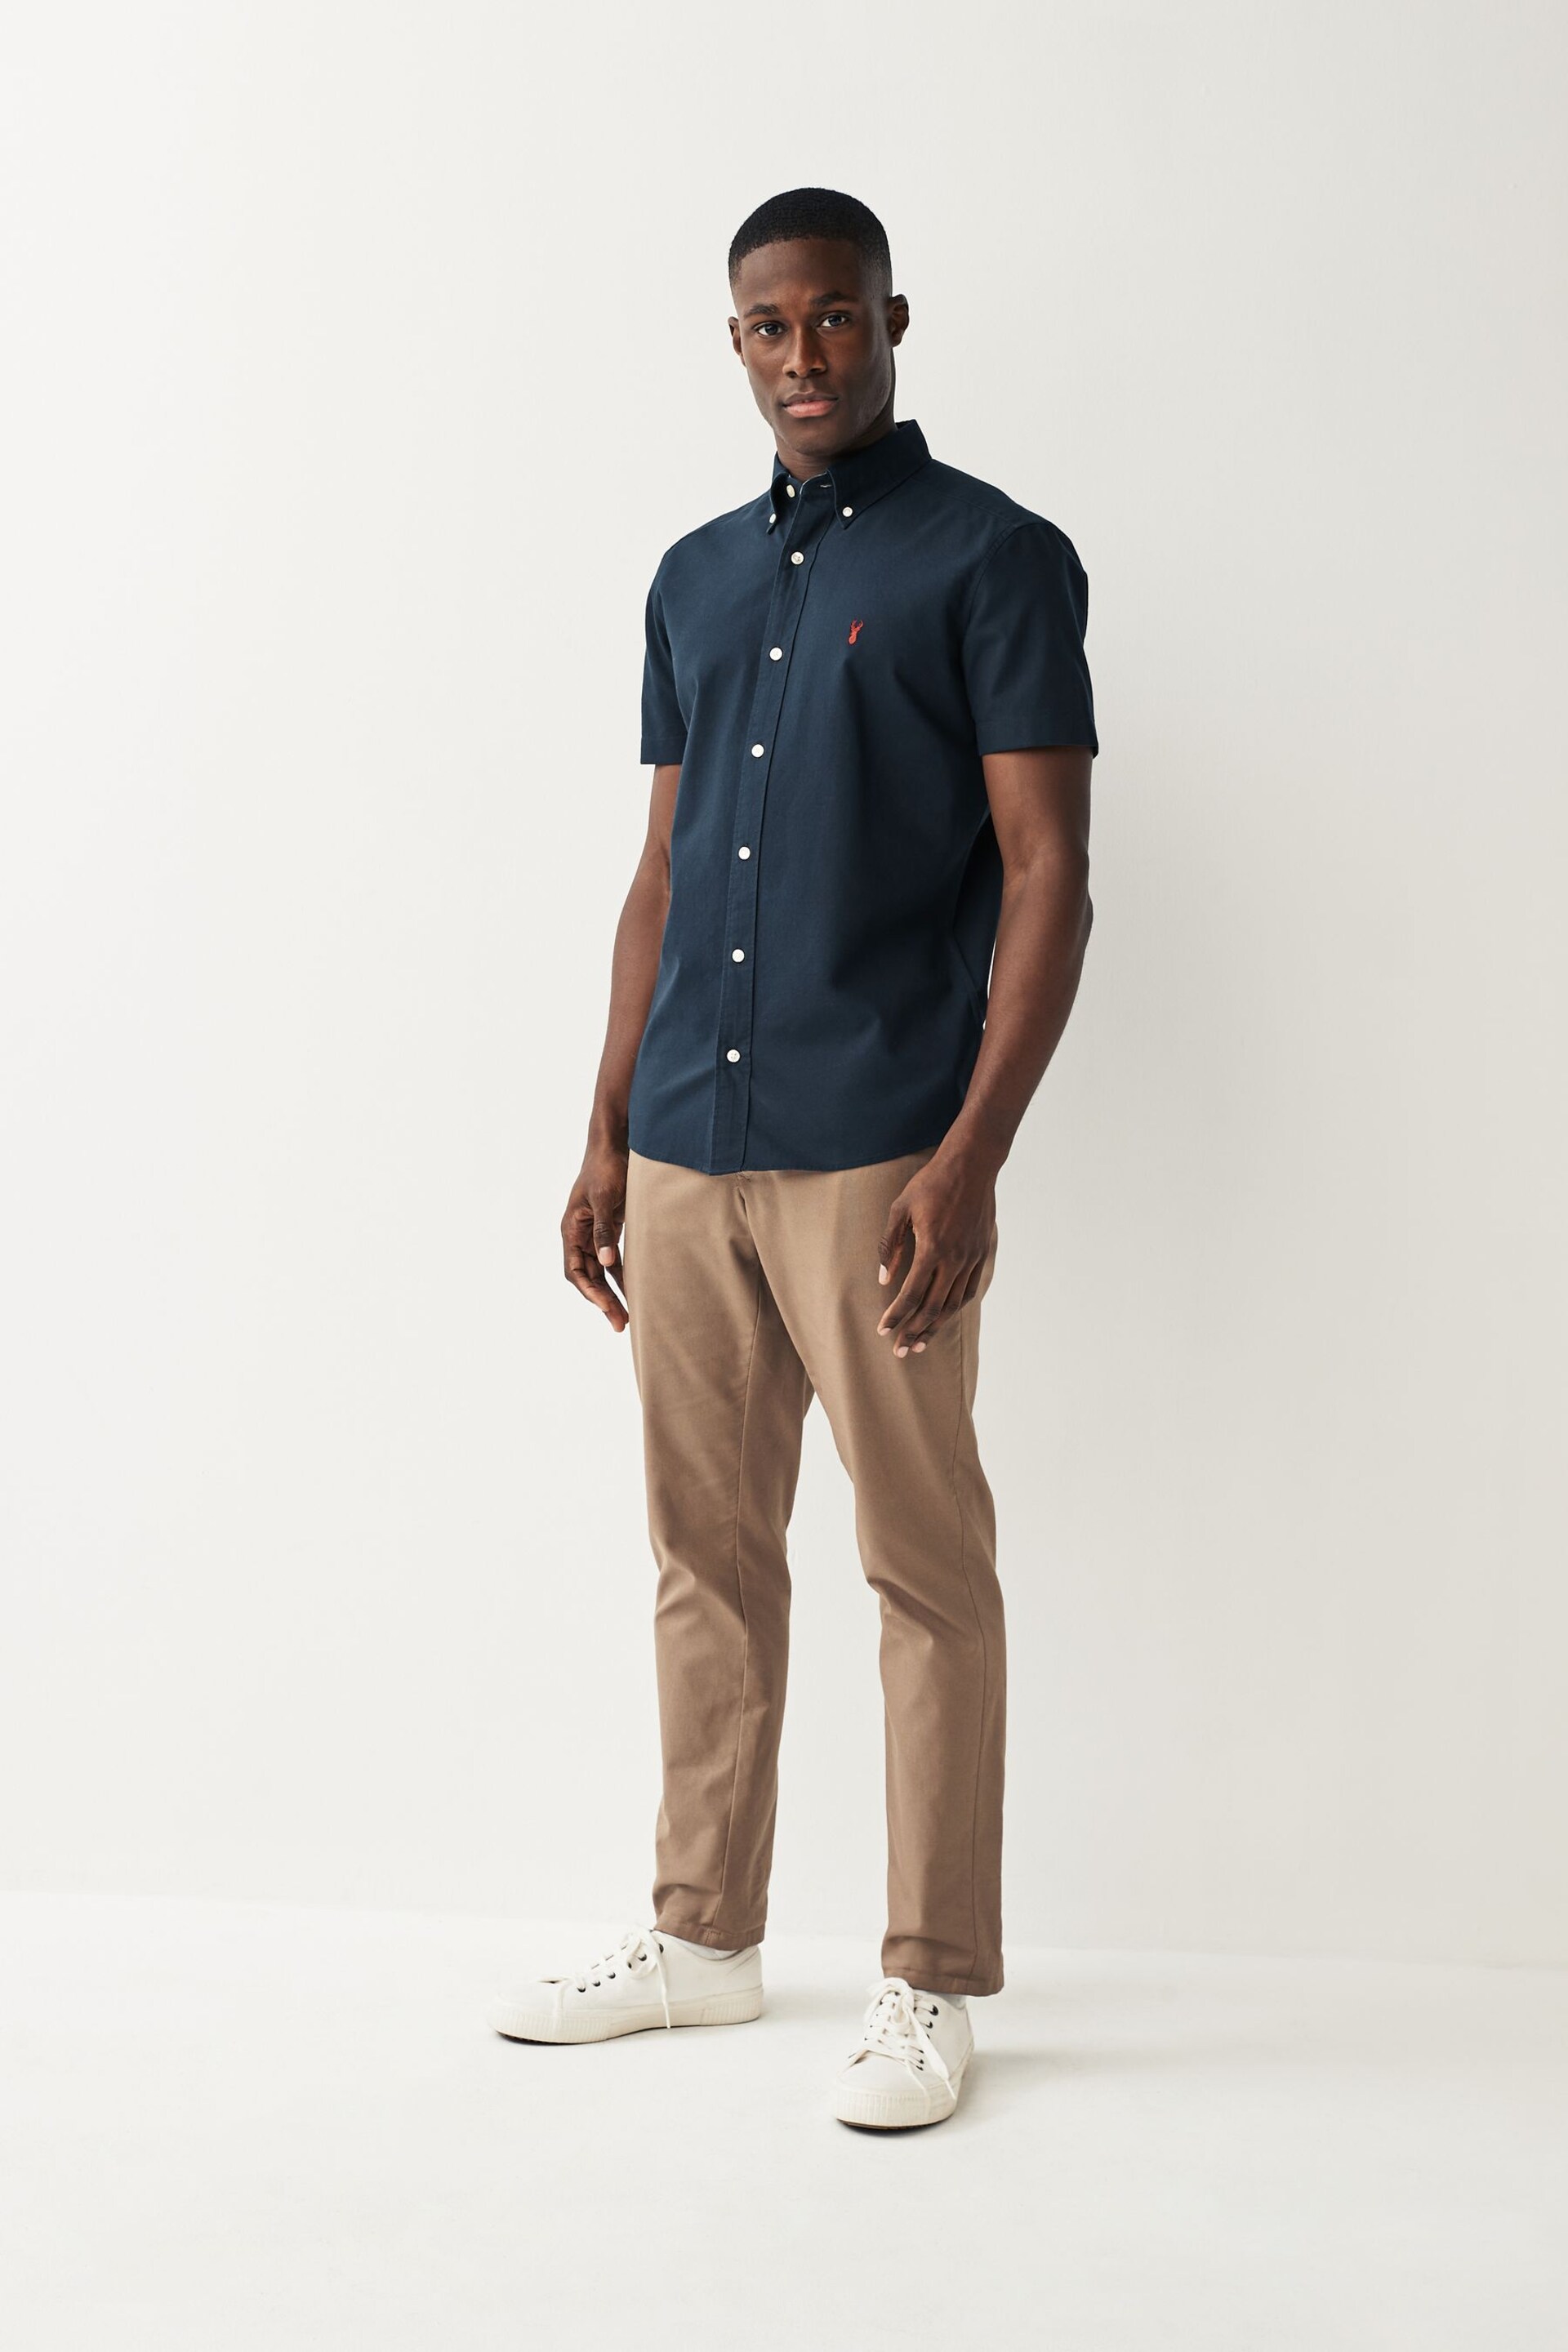 Navy Blue Slim Fit Short Sleeve Oxford Shirt - Image 2 of 6